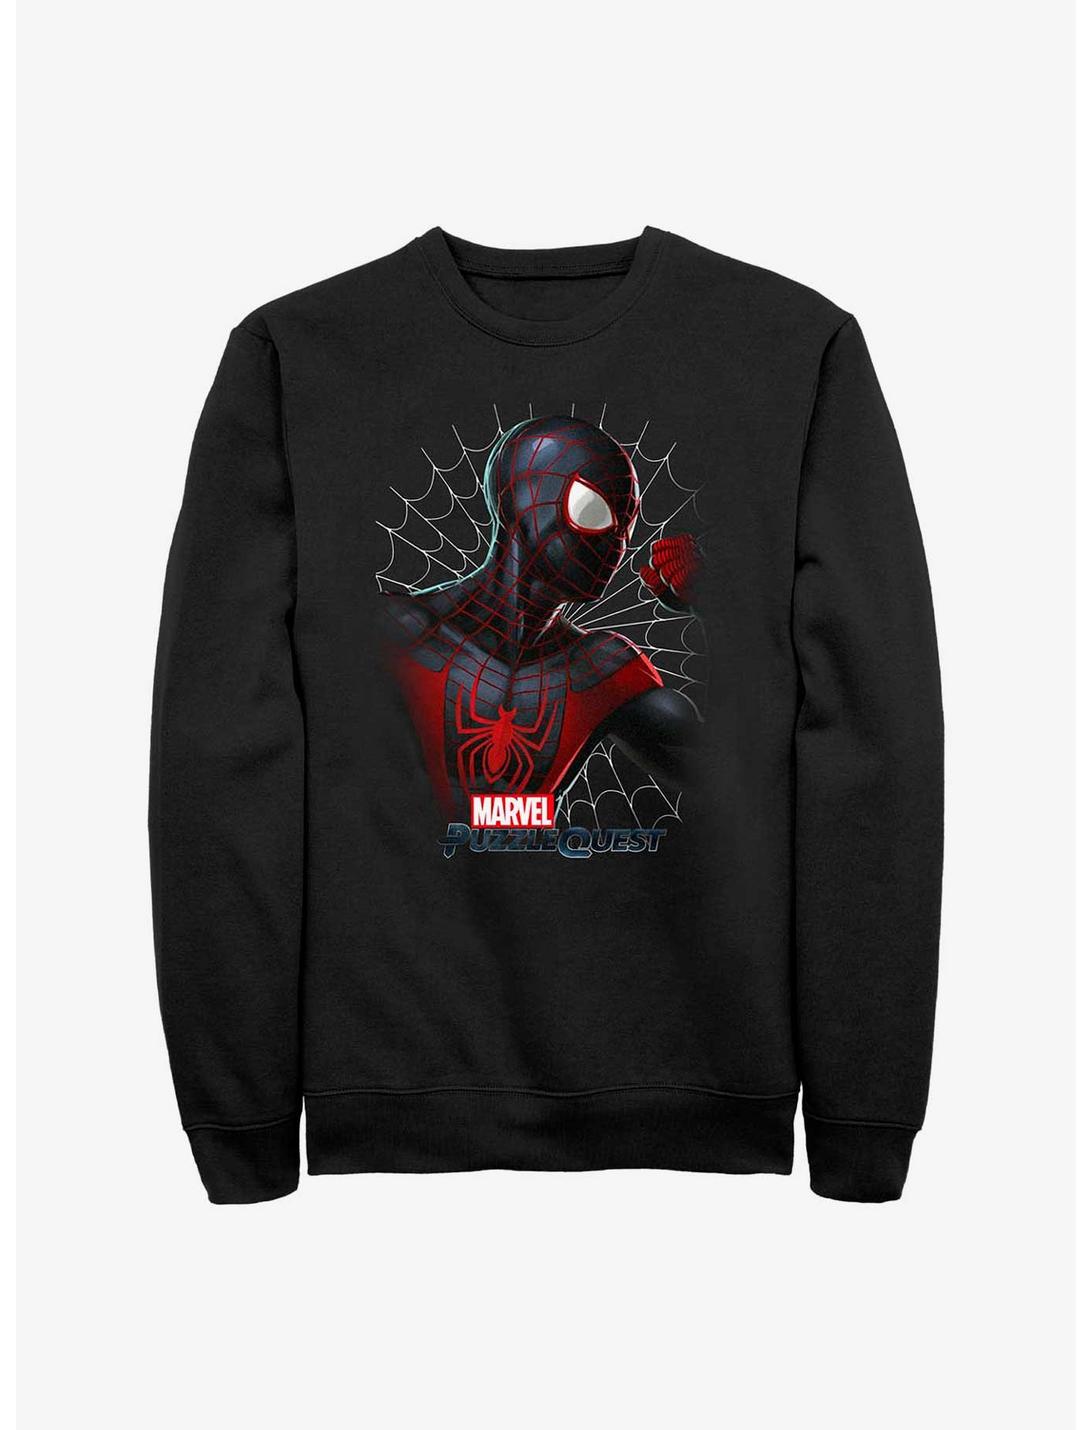 Marvel Spider-Man Miles Morales Puzzle Quest Sweatshirt, BLACK, hi-res